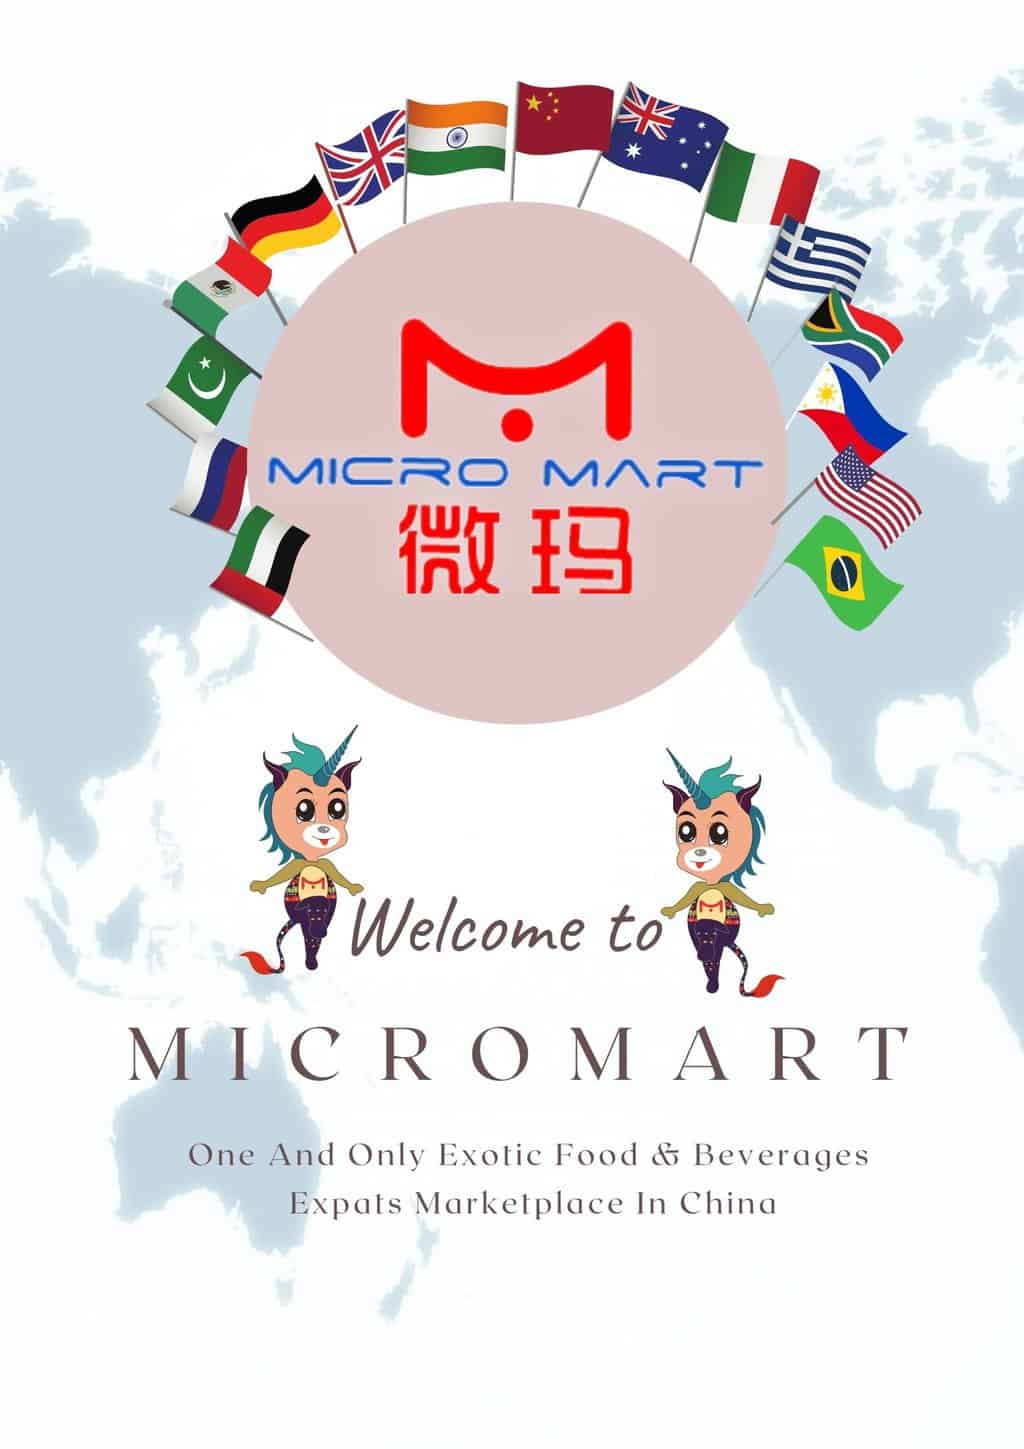 Micromart